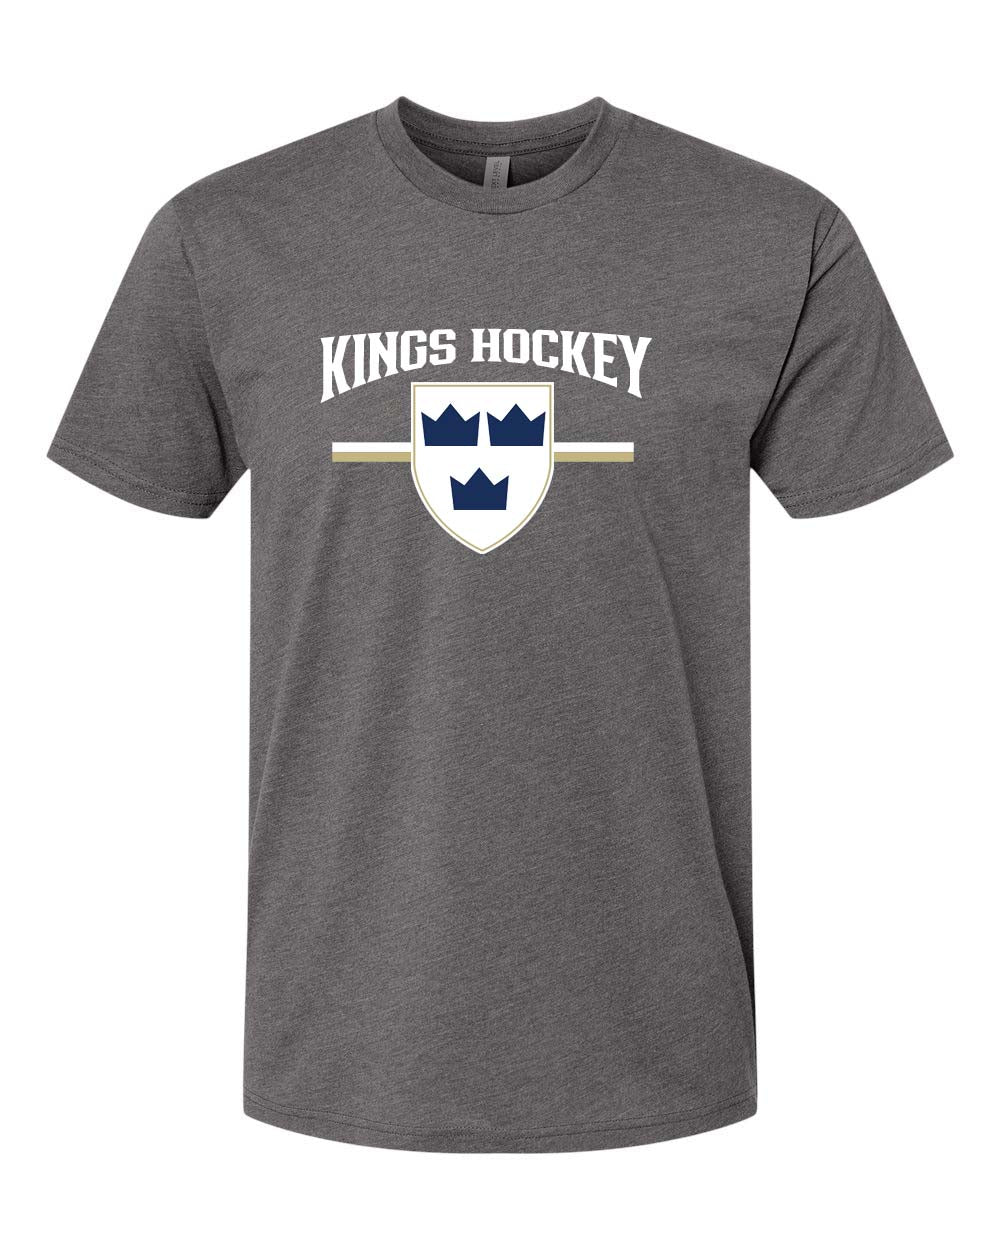 Kings Hockey Design 5 T-Shirt